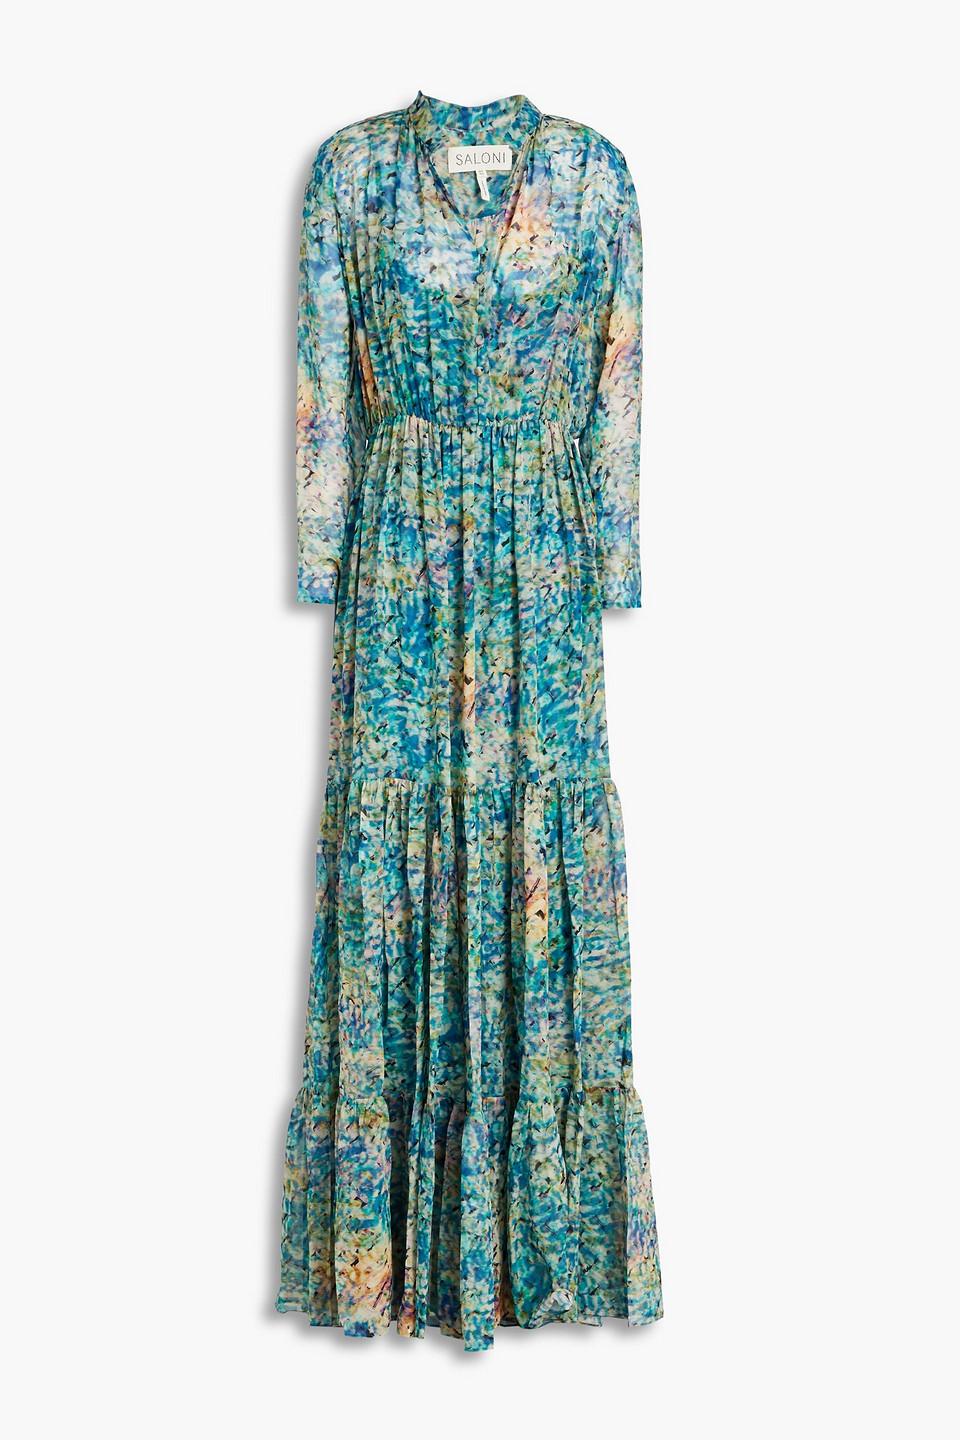 Saloni Alexia Tiered Printed Silk-chiffon Maxi Dress in Blue | Lyst